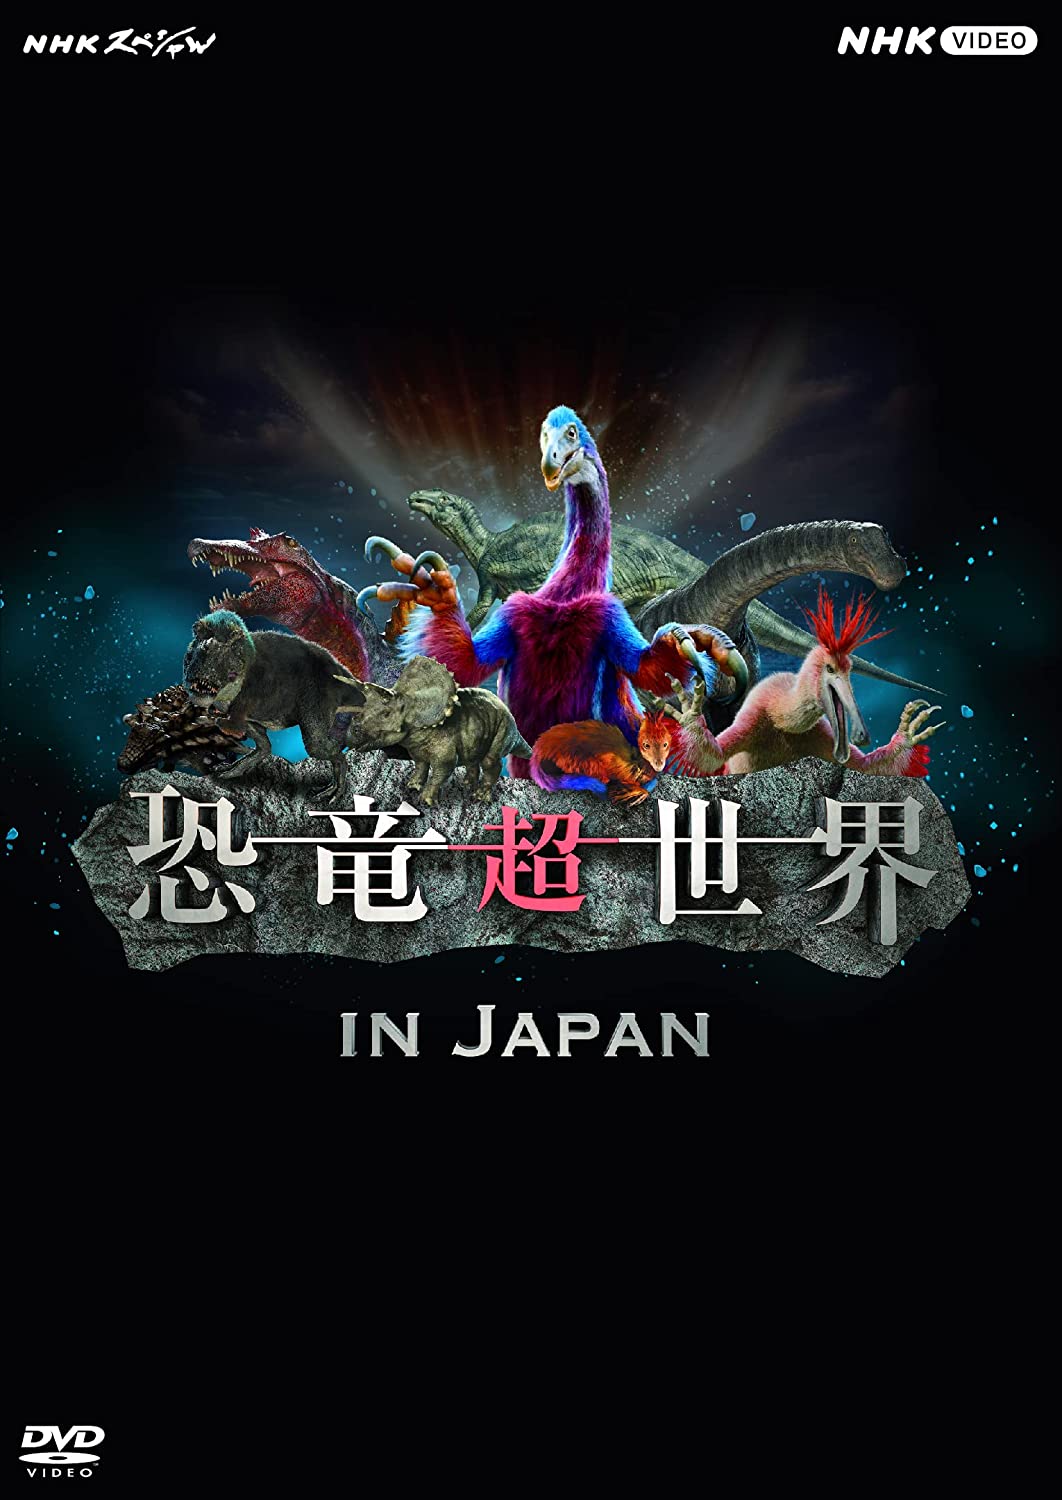 新品 NHKスペシャル 恐竜超世界 in Japan / 上白石萌音, 野沢雅子 (DVD) NSDS-53633-NHK